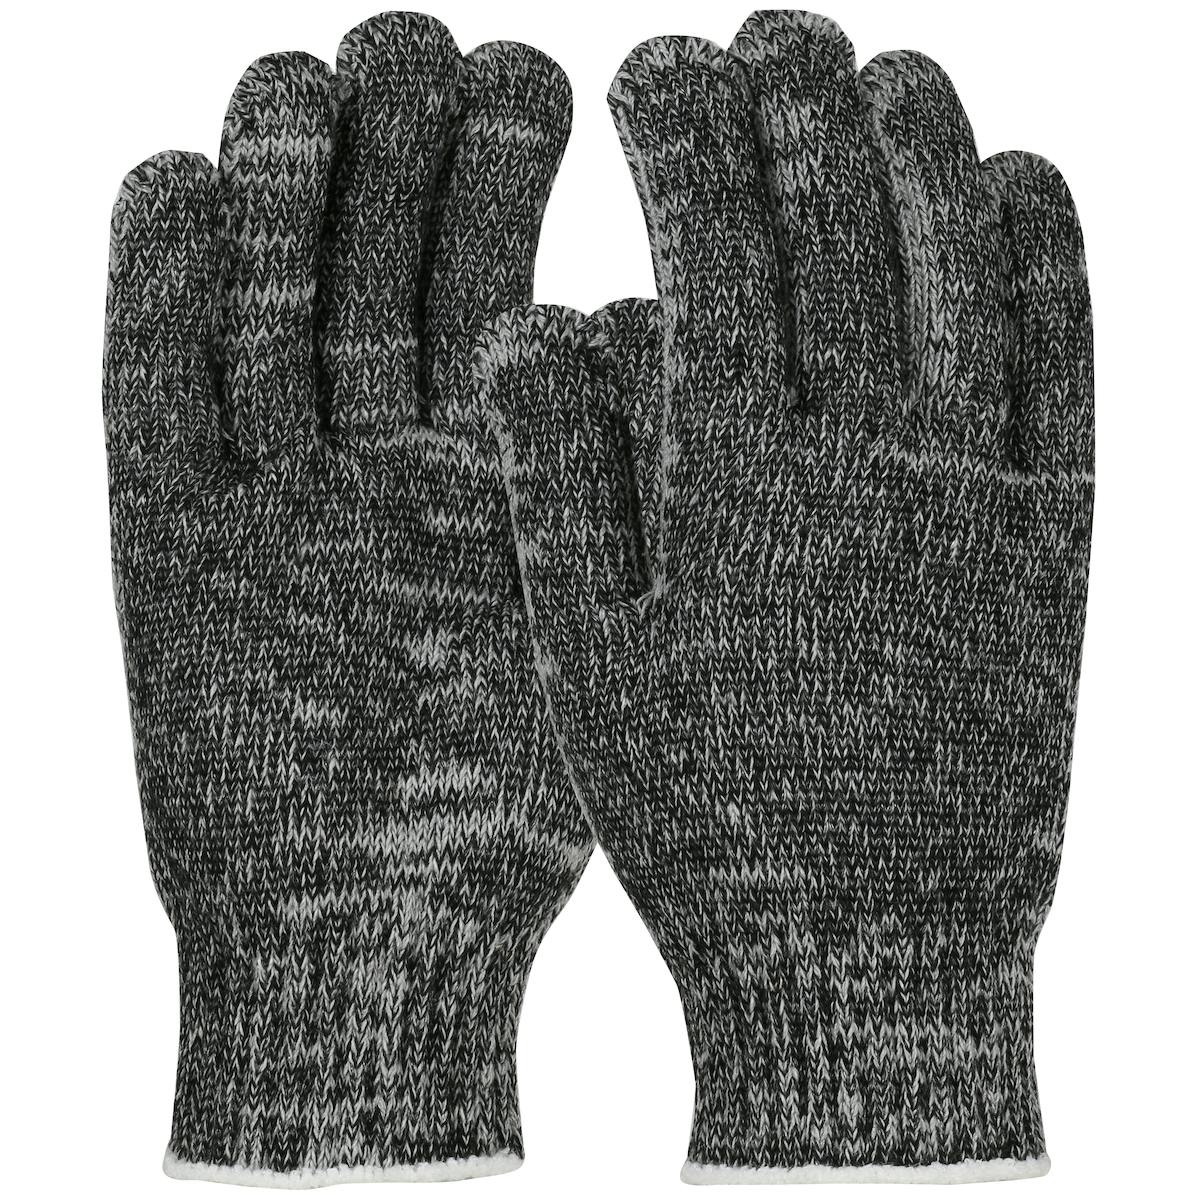 Kut Gard® Seamless Knit ATA® / Cotton Blended Glove - Heavy Weight (MATPBK40GYPL)